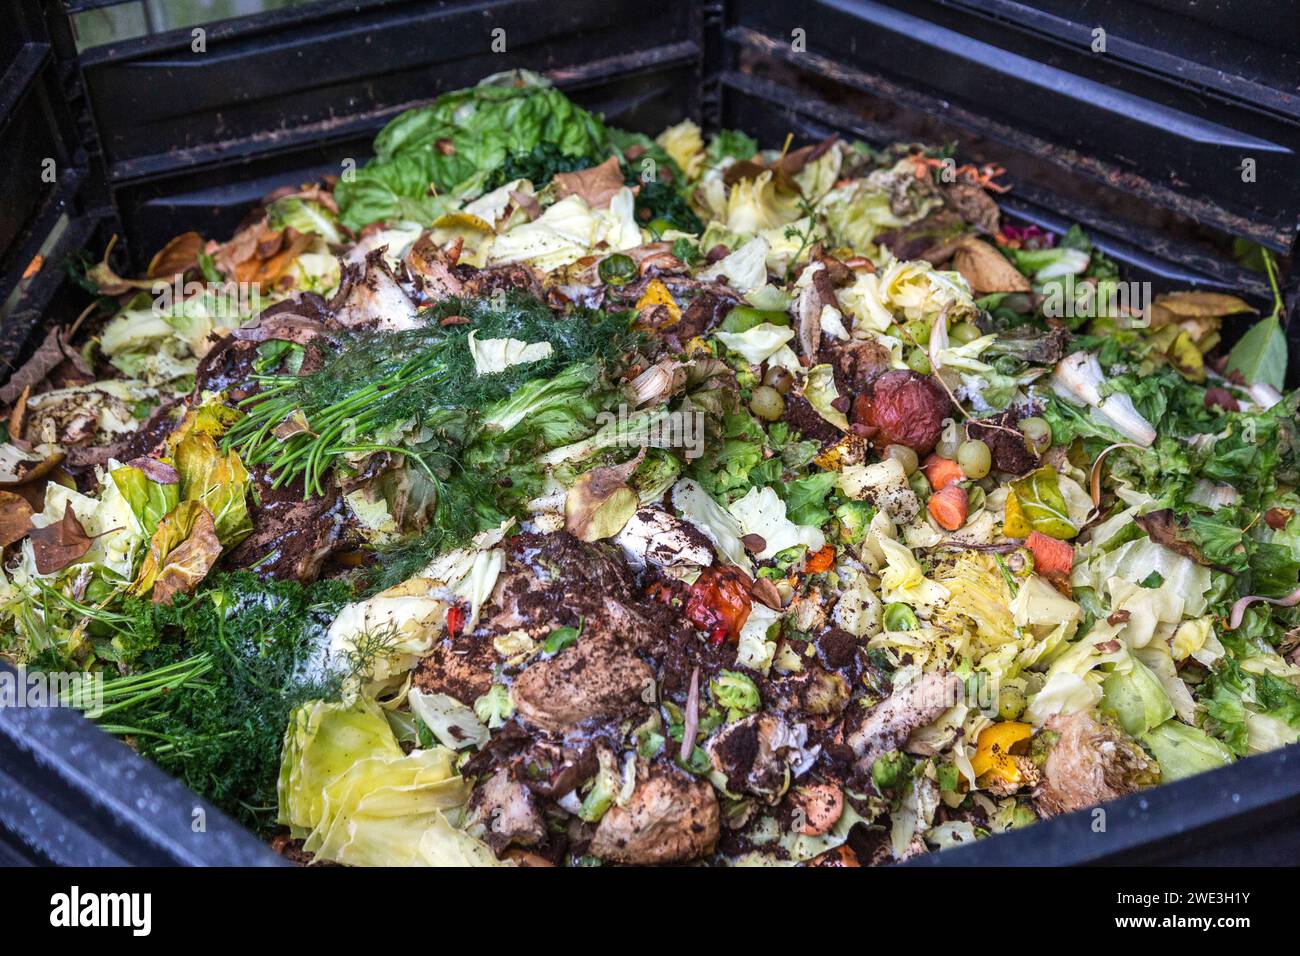 Oekologie, Gartenbau, Recycling, Offene Kompostierung, Komposter mit Gemueseabfall und Kuechenabfall *** Local Caption *** Stock Photo